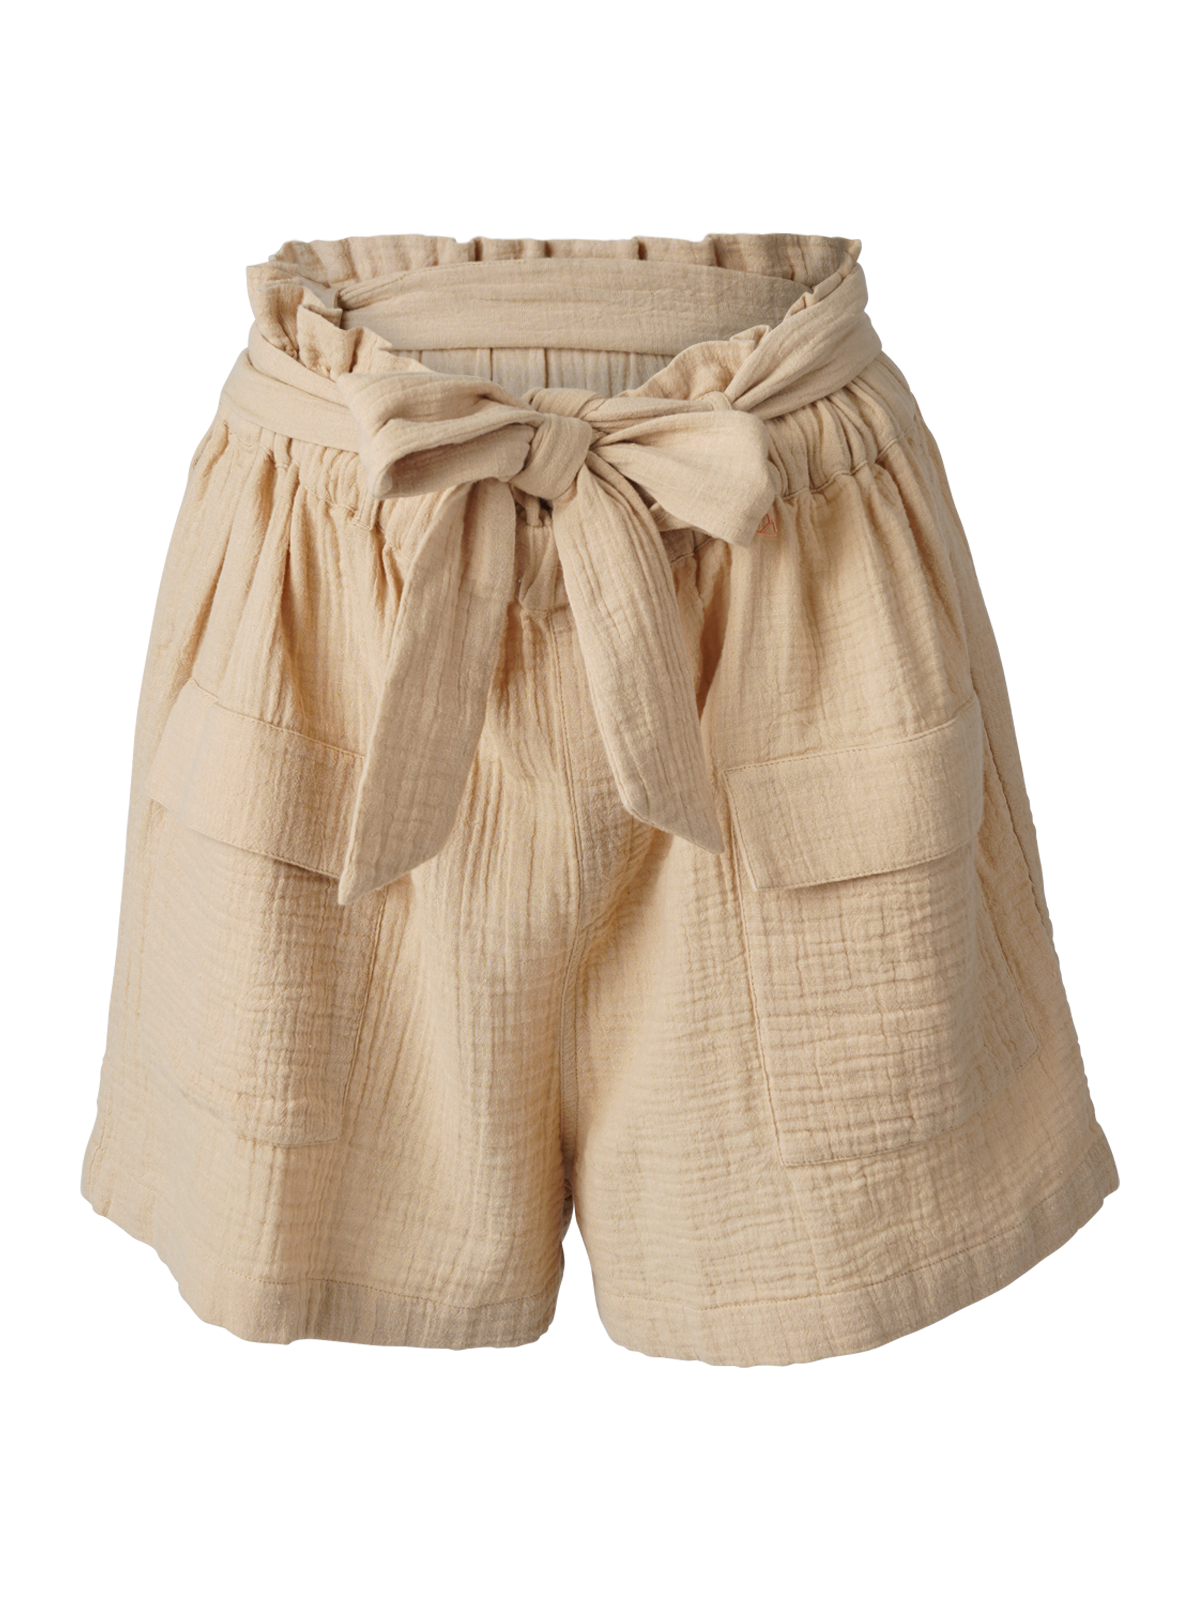 BRUNOTTI - ryo women shorts - Beige